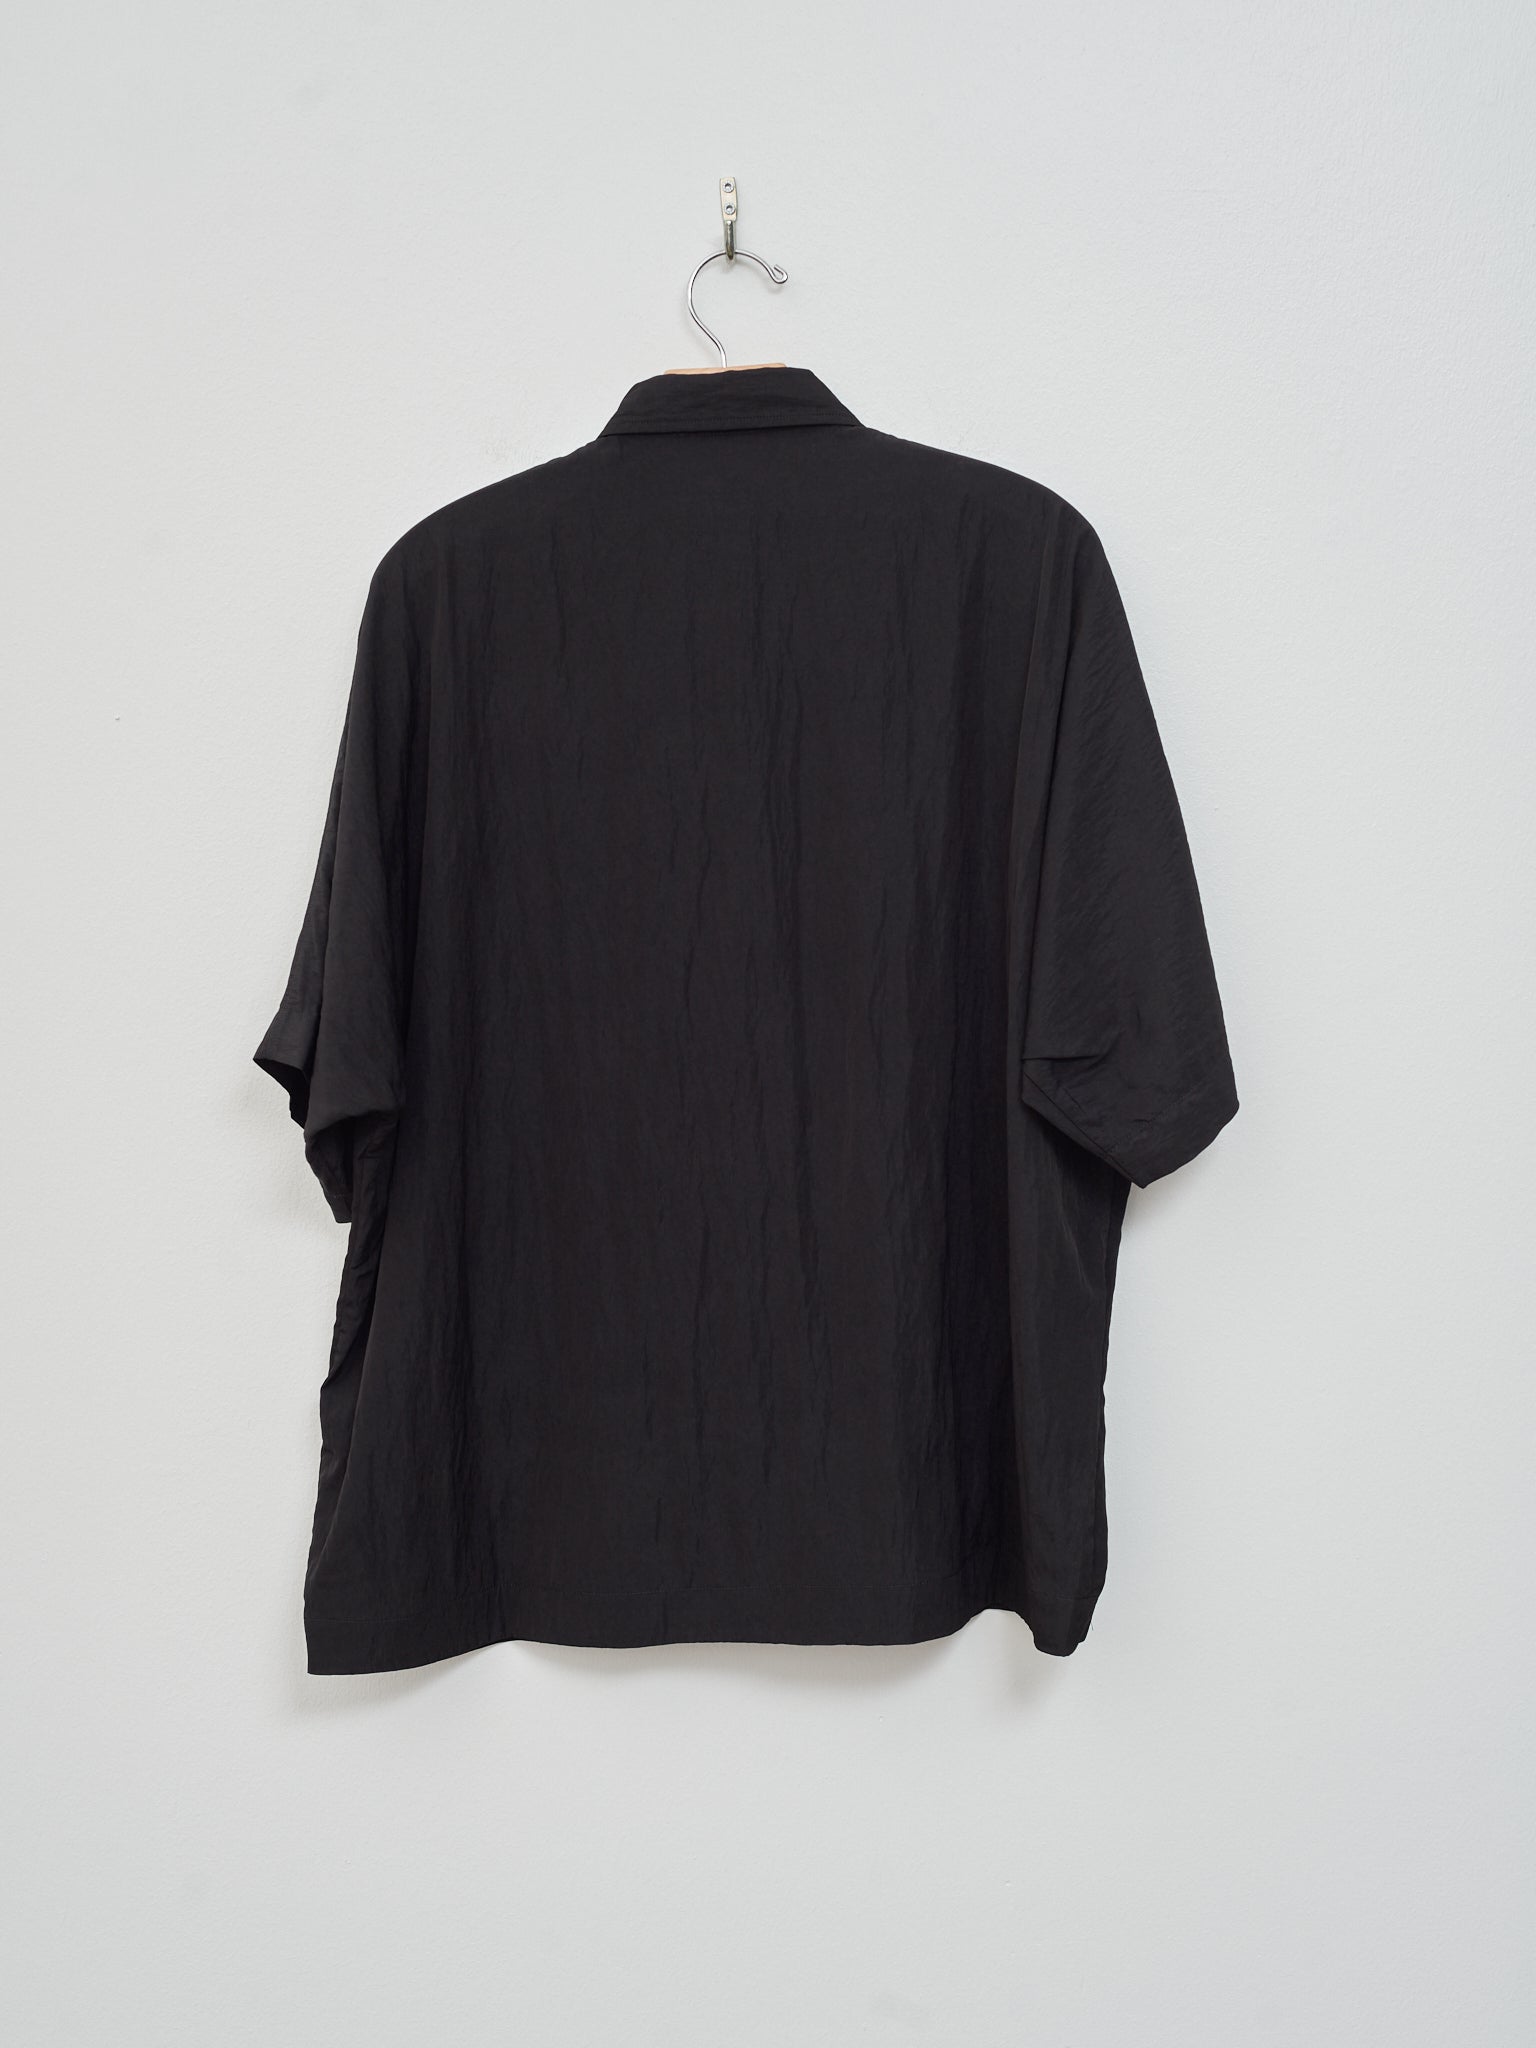 Namu Shop - Studio Nicholson Kanno Shirt - Black